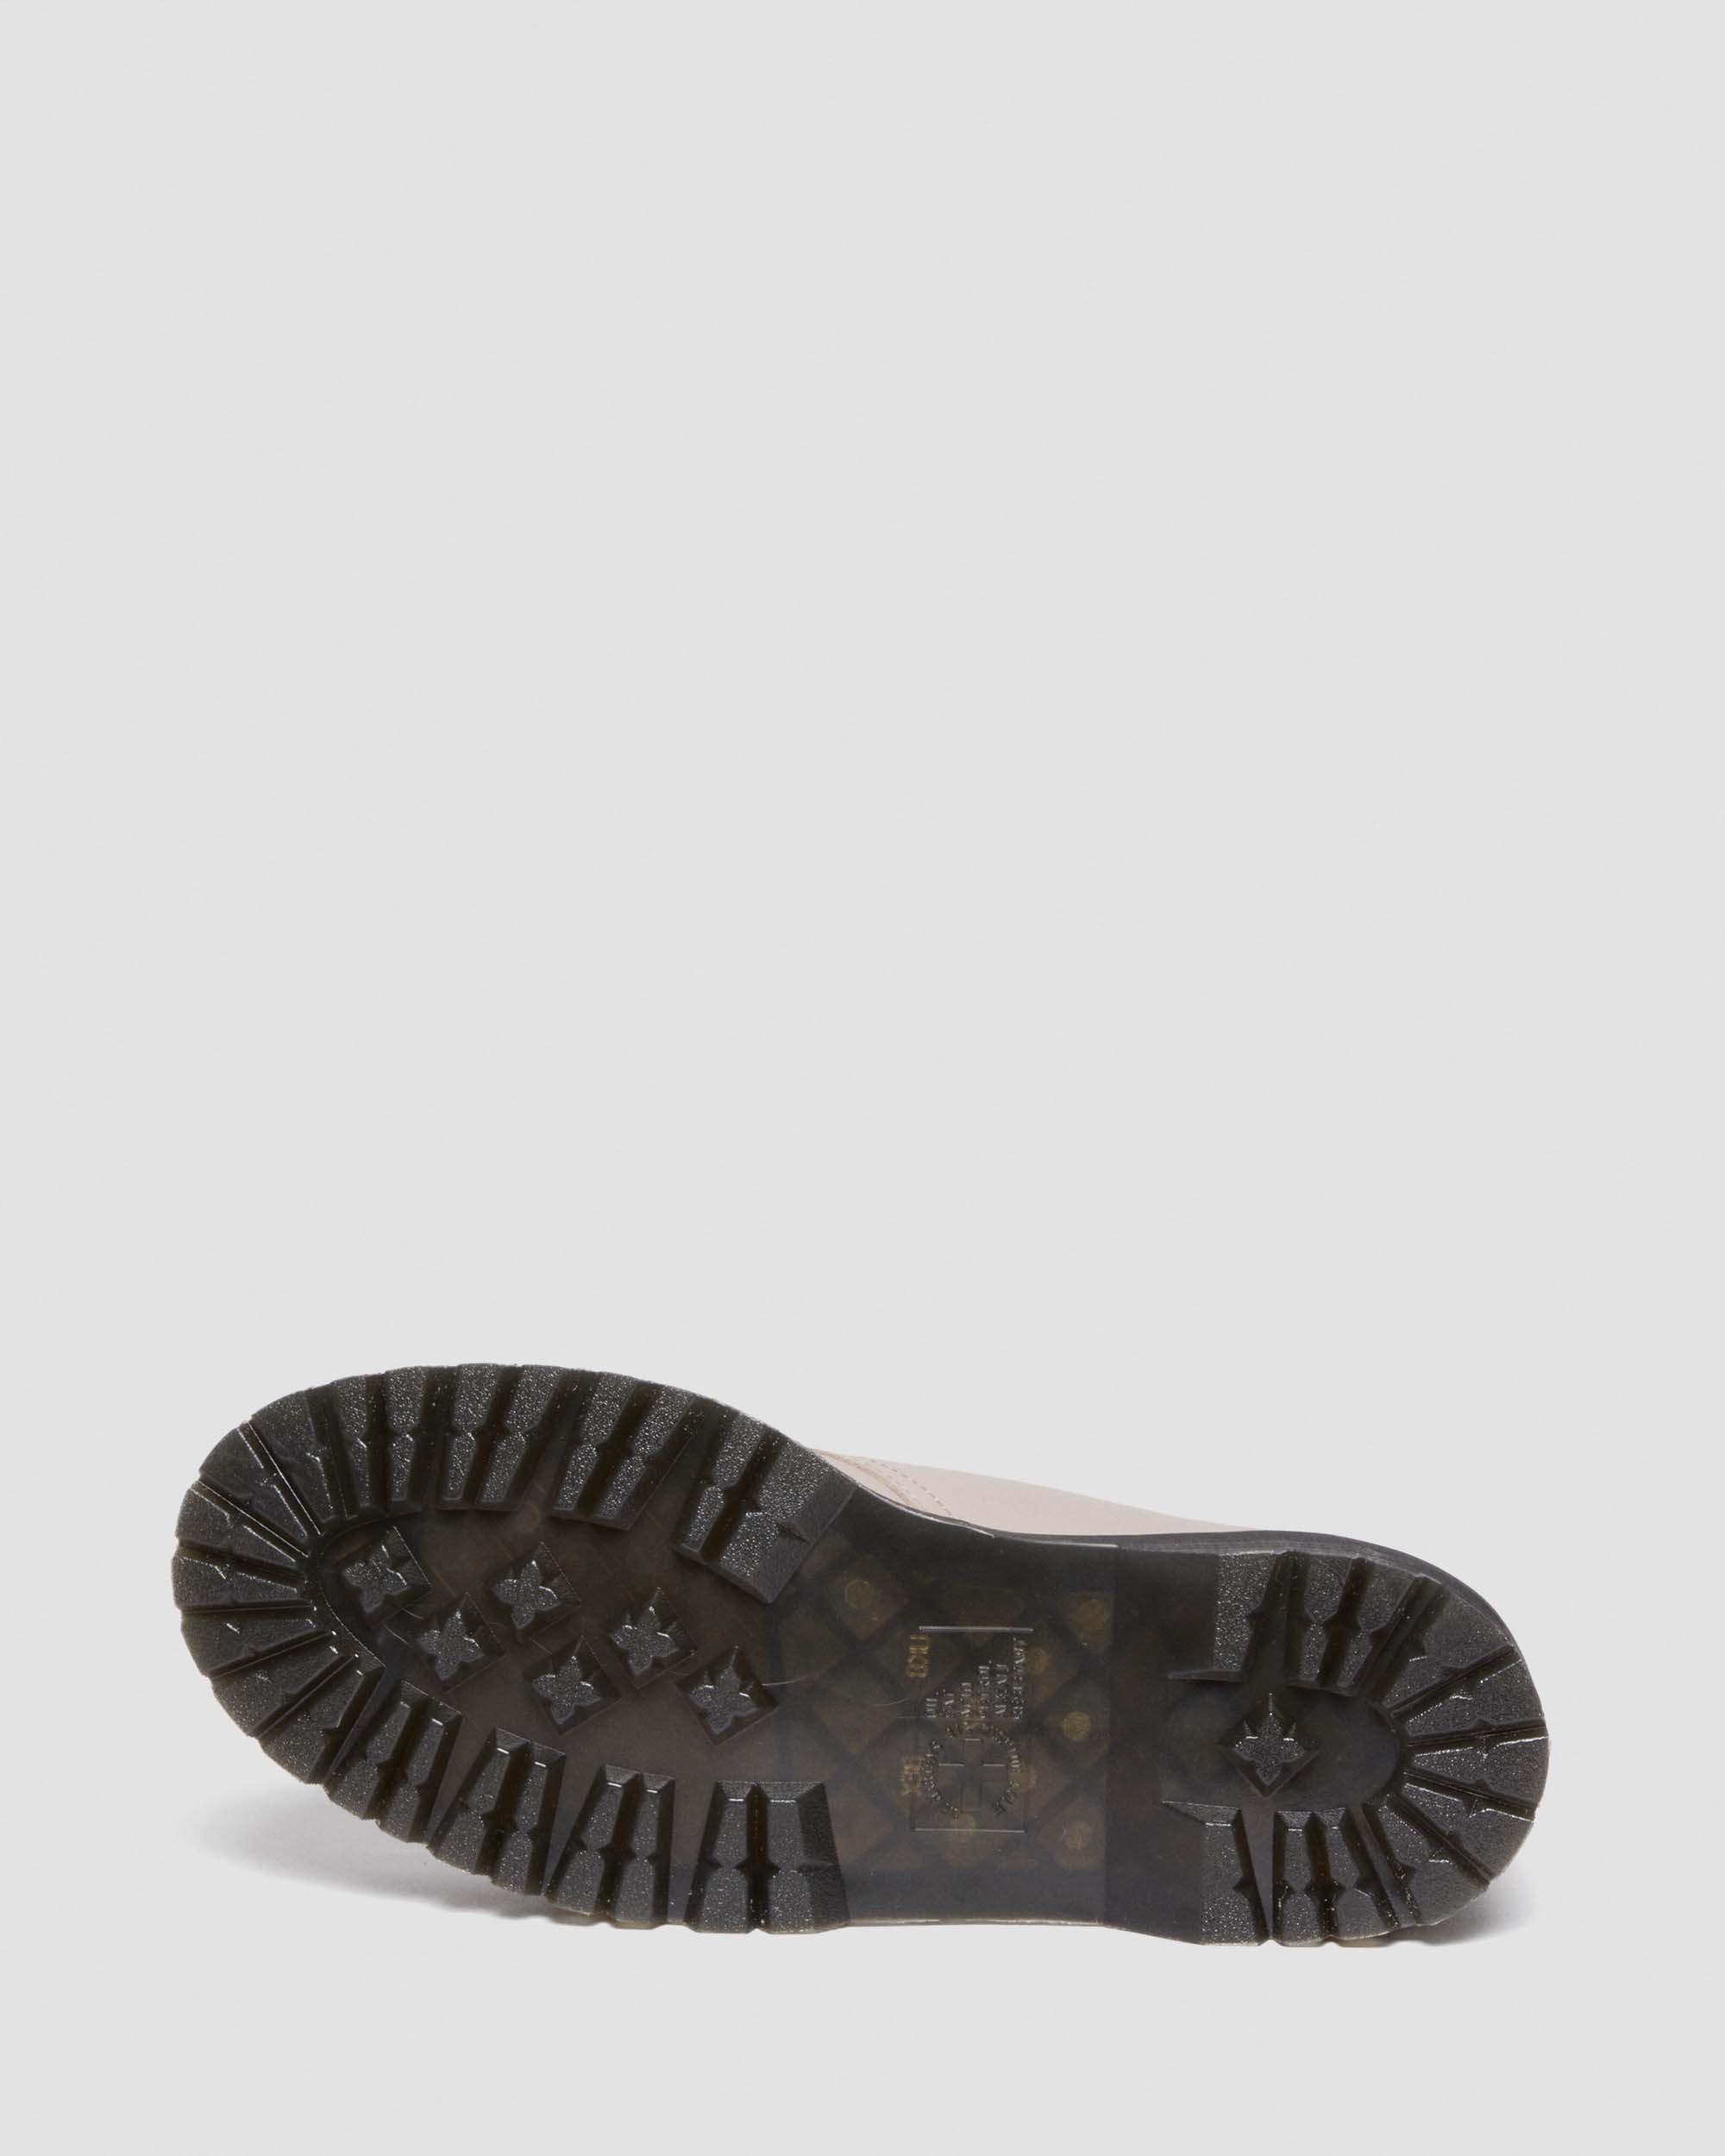 1461 II Pisa Leather Platform Shoes in VINTAGE TAUPE